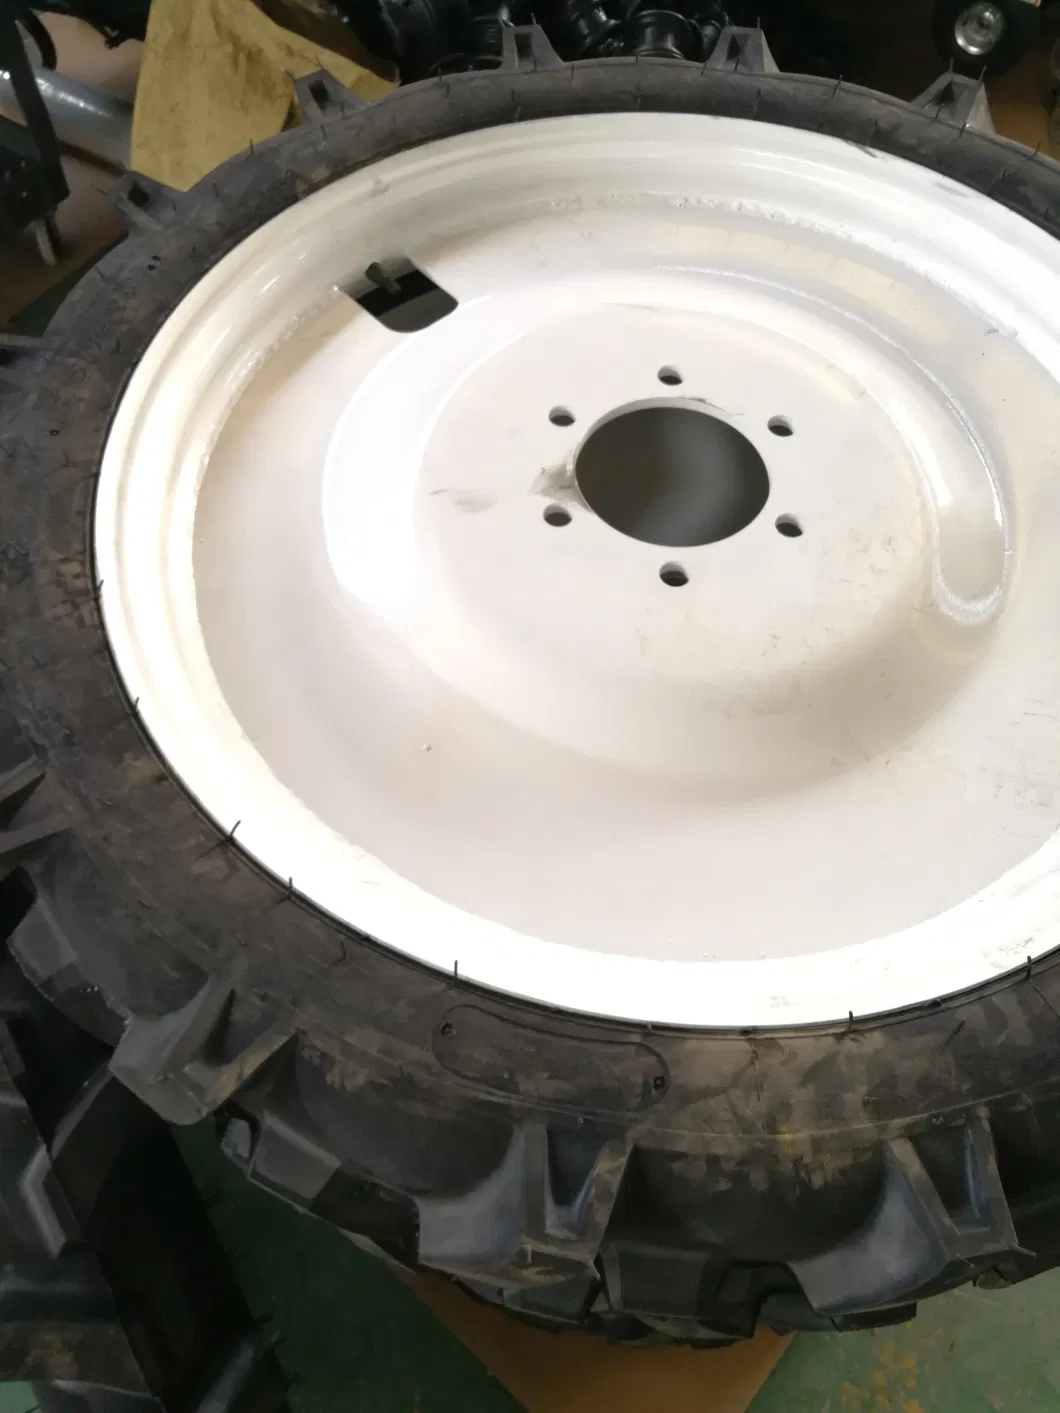 Big Herringbone Pneumatic Rubber Tyre Air Industrial/Agricultural Tyre/Tire 6.00-29 Wheel